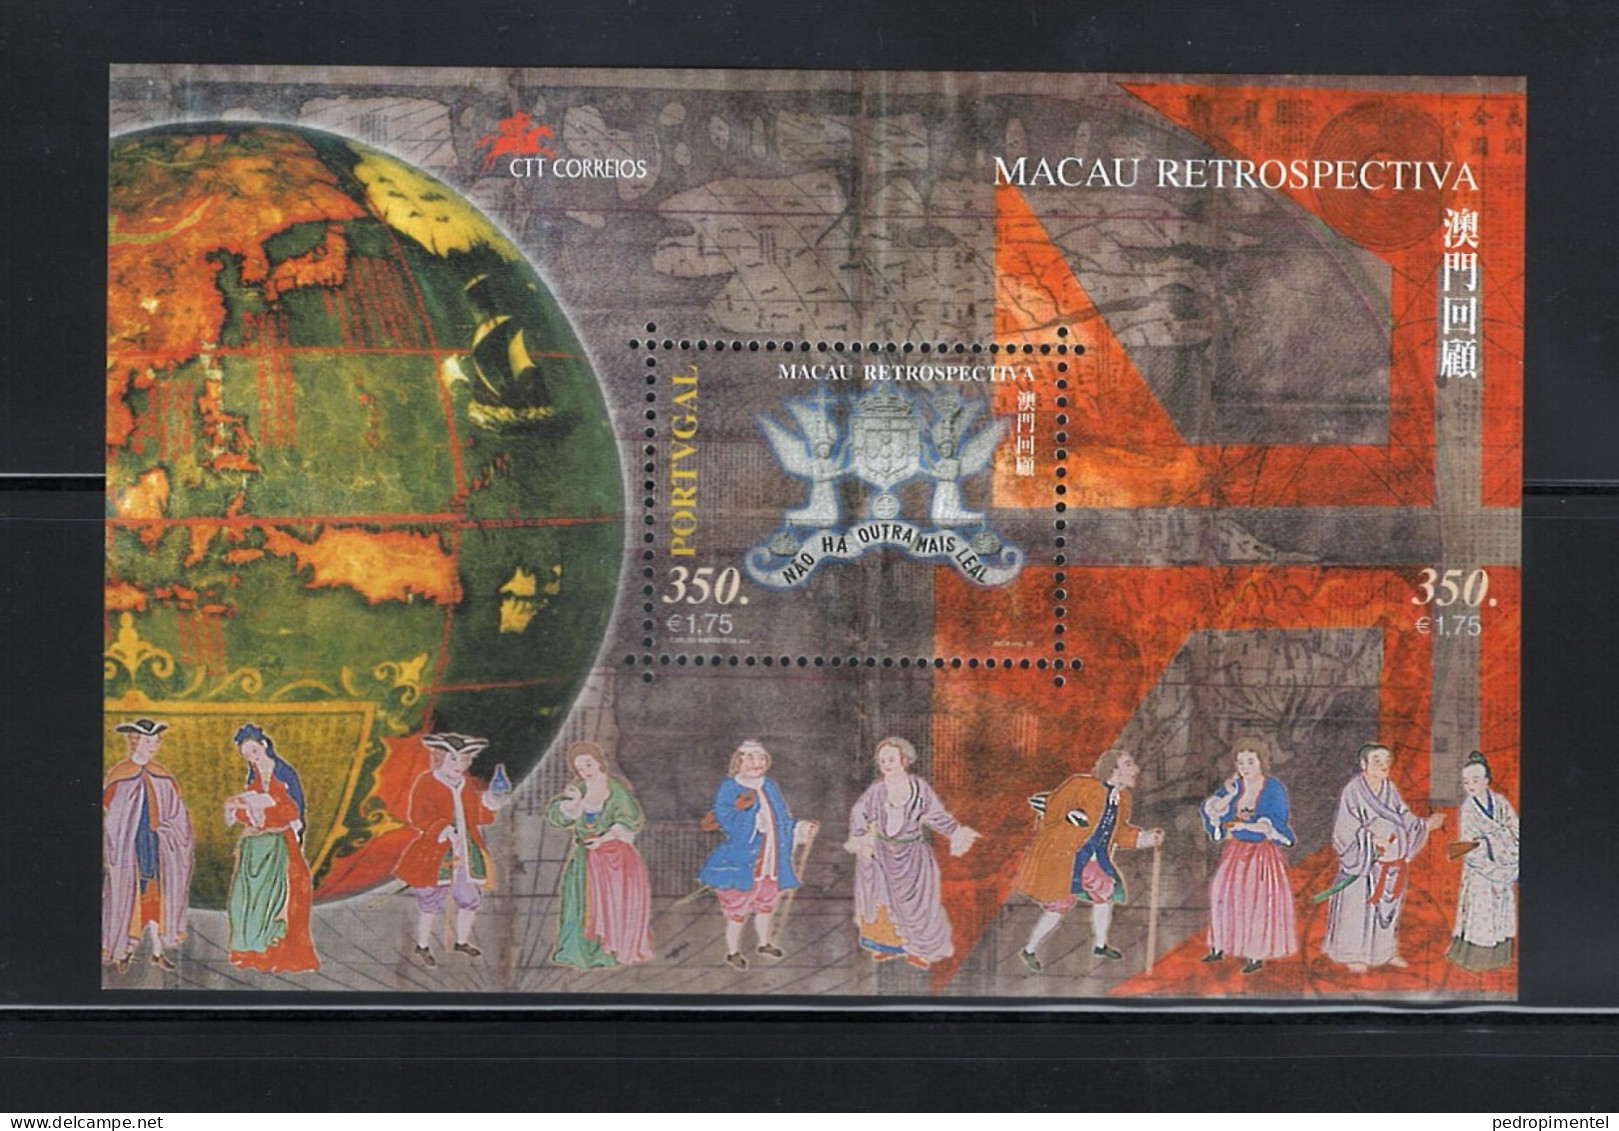 Portugal Stamps 1999 "Macau Retrospective" Condition MNH Minisheet #2639 - Nuevos